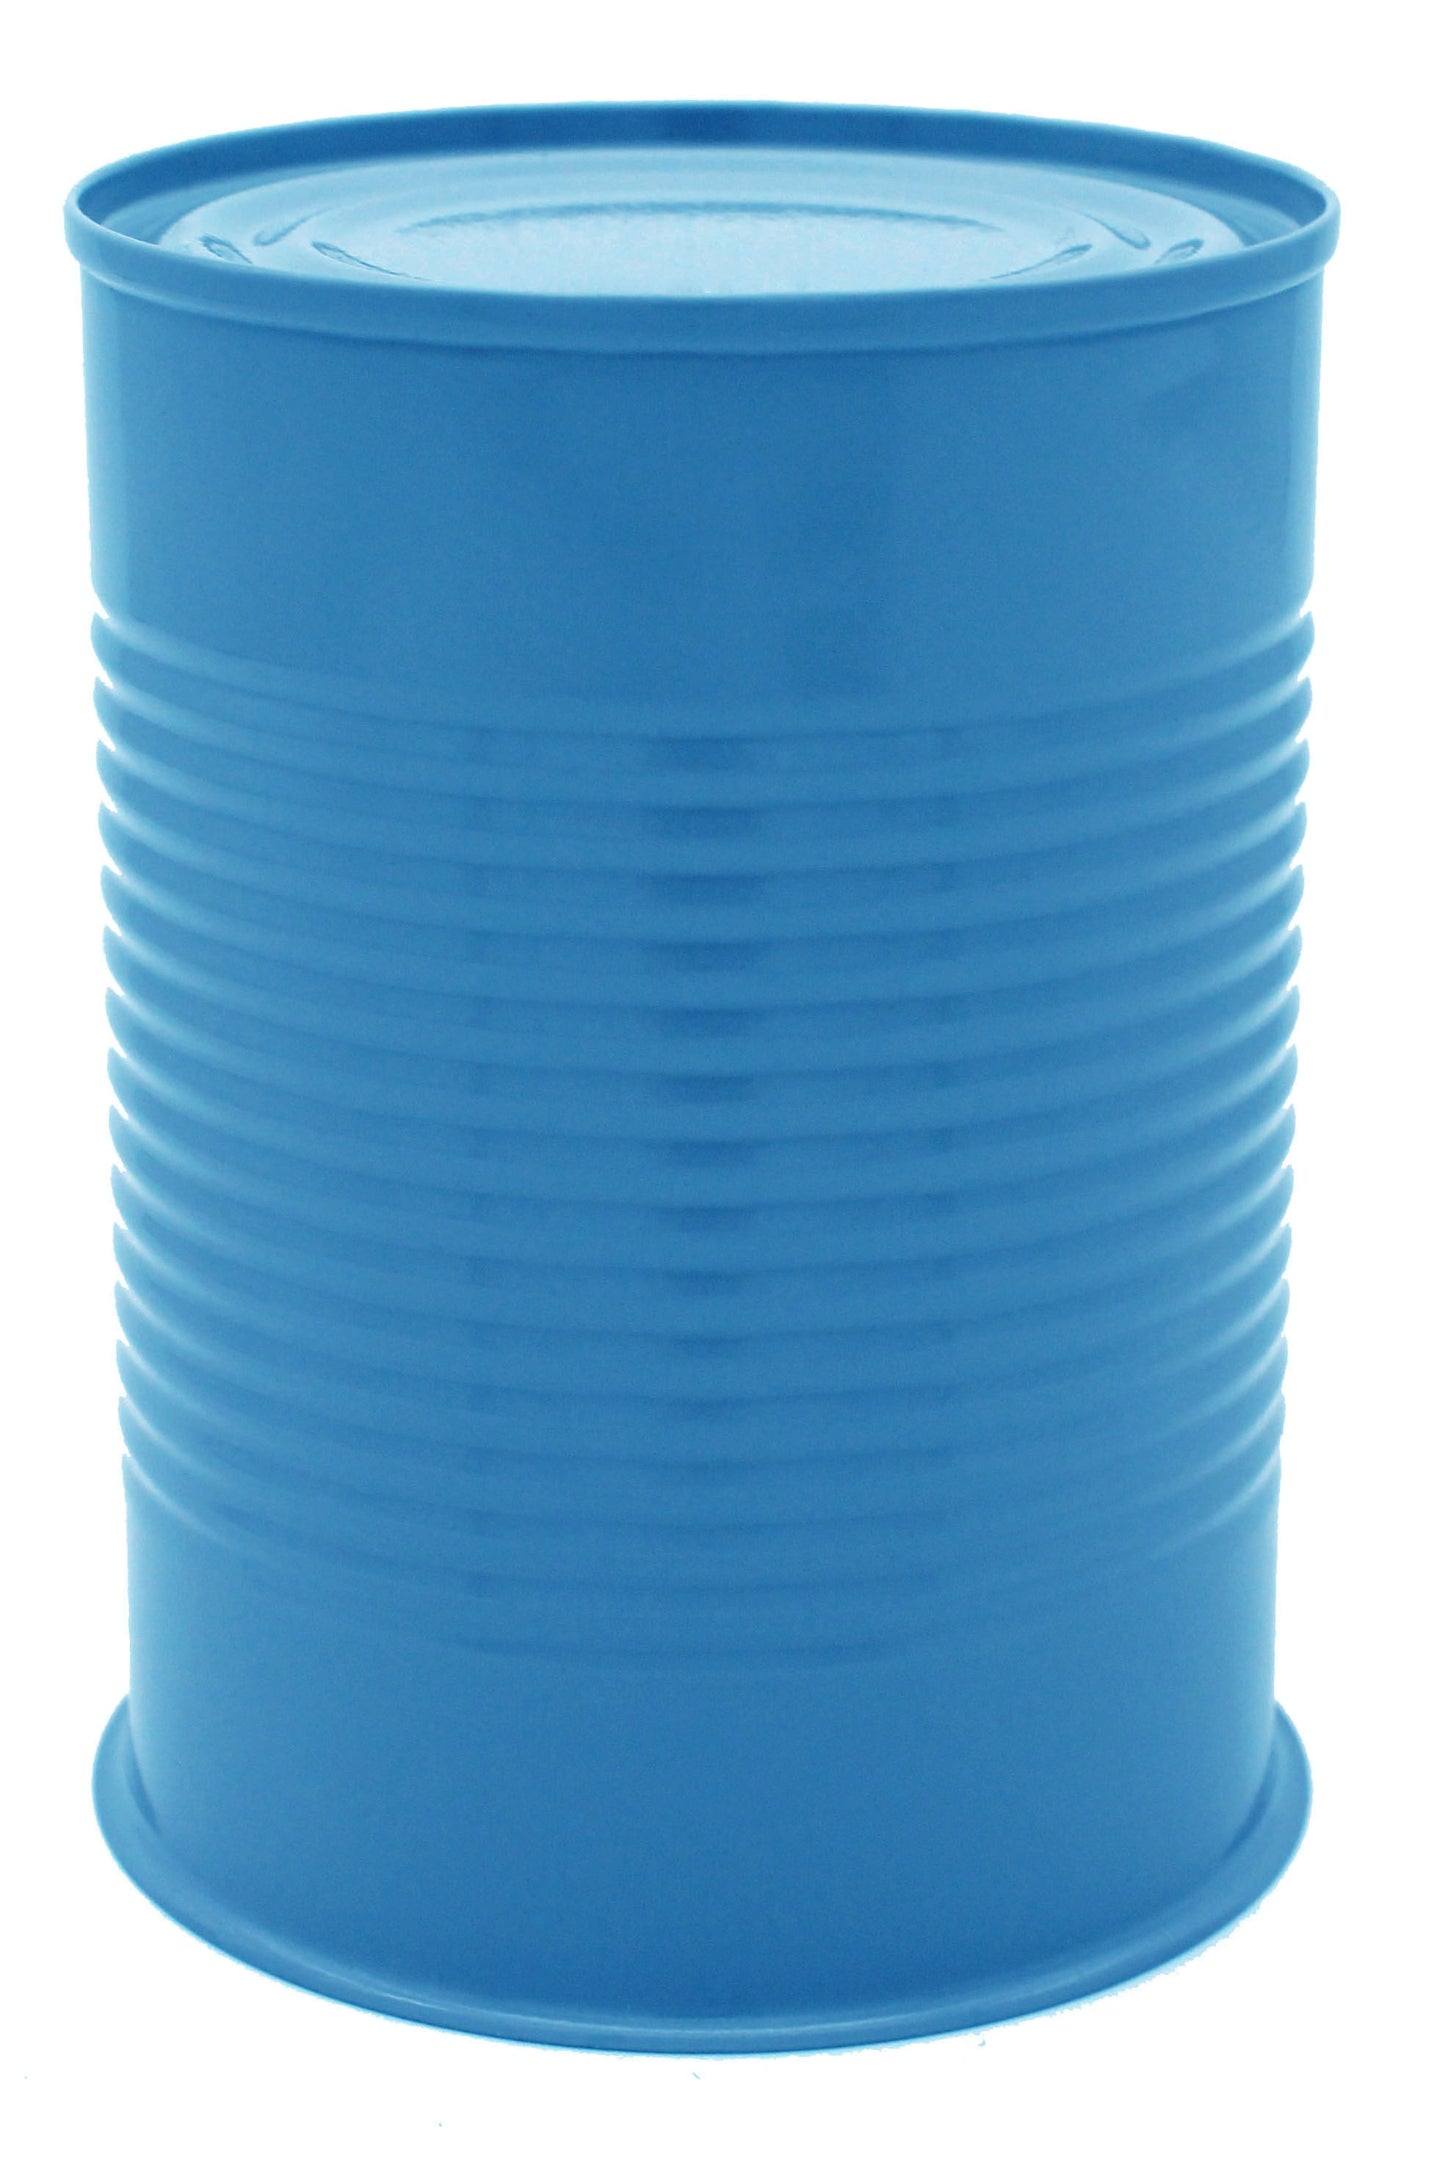 Jotun RAL 5015 Sky Blue Polyester 80 Gloss Powder Coating 20kg Box